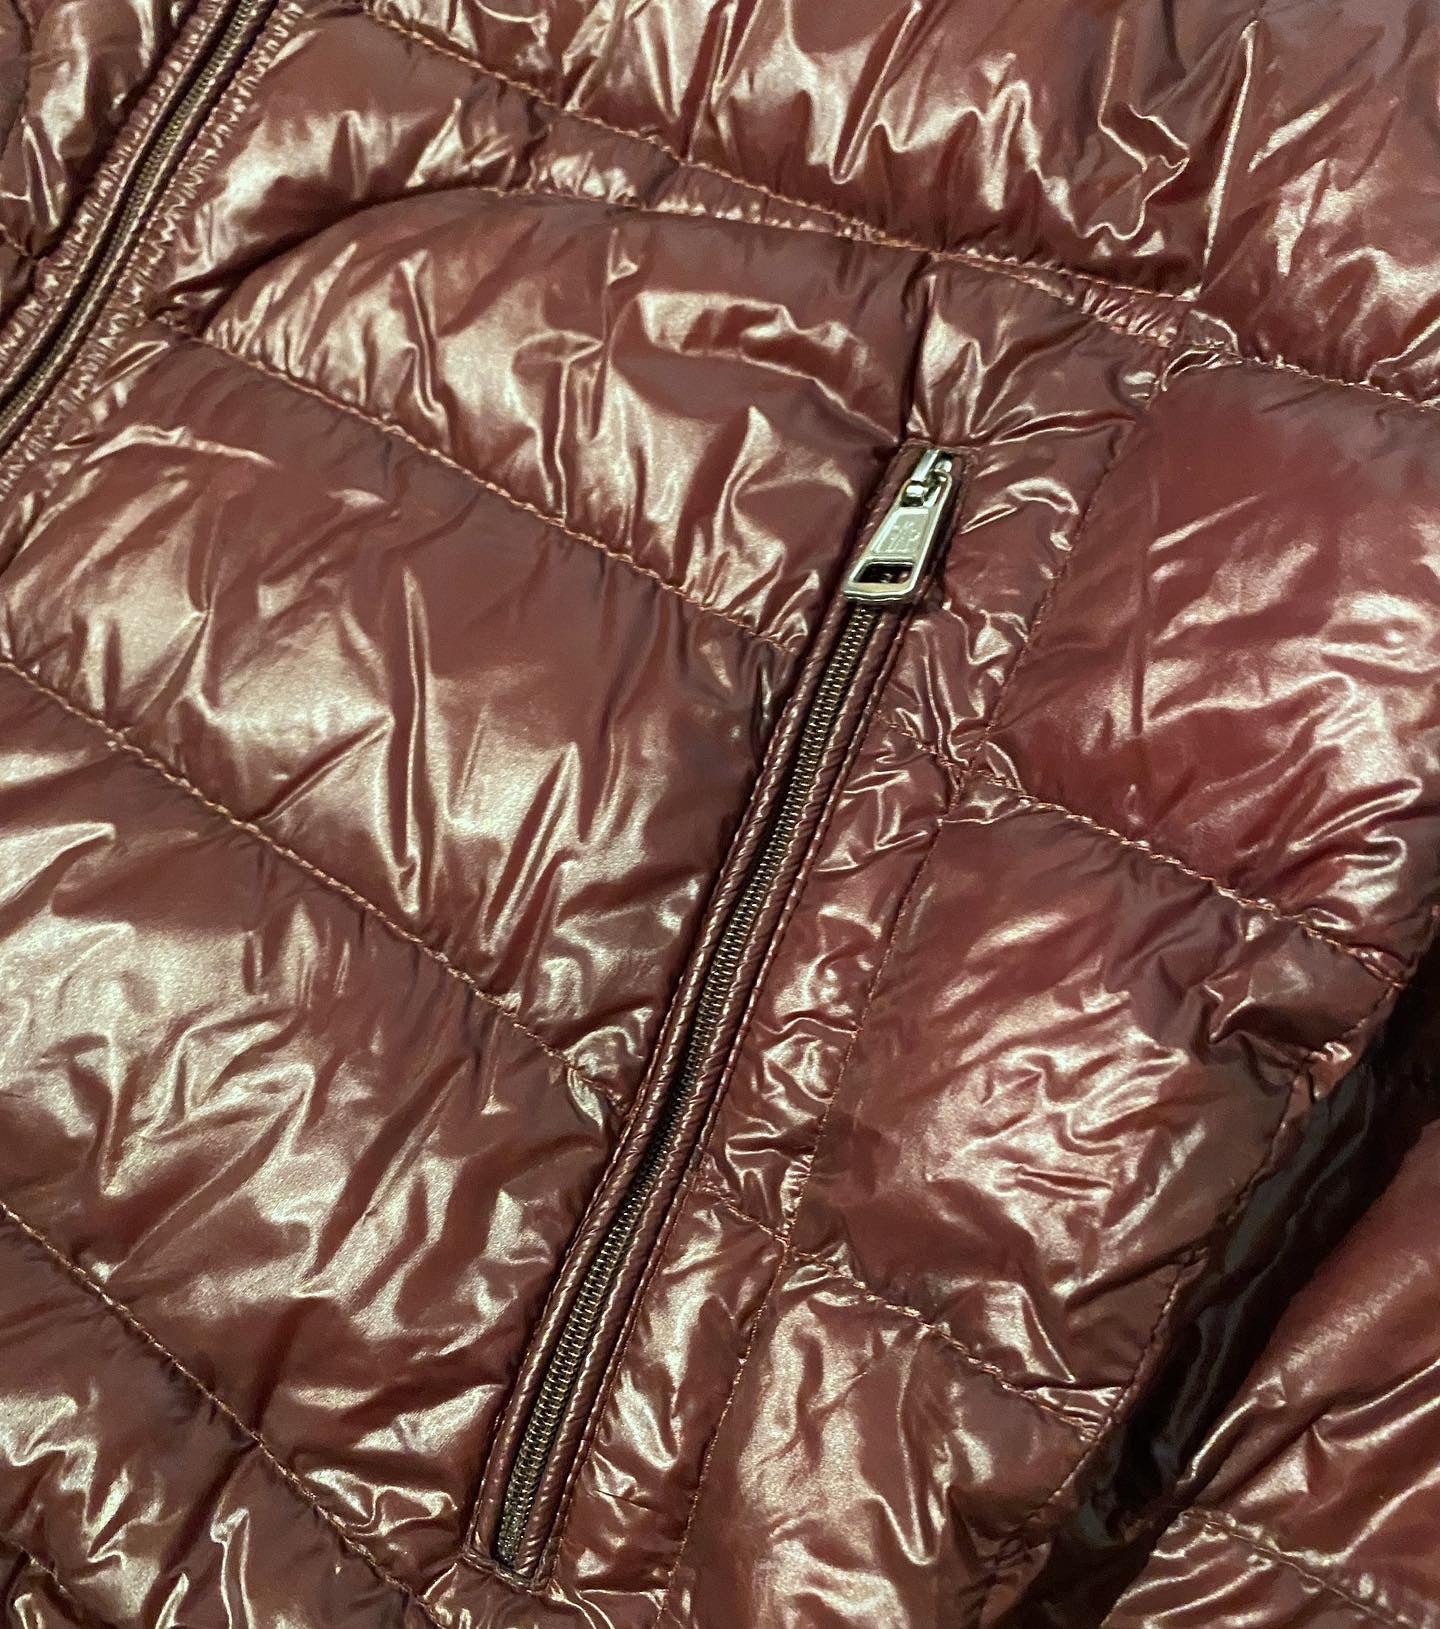 Moncler Acorus Jacket - Size 2